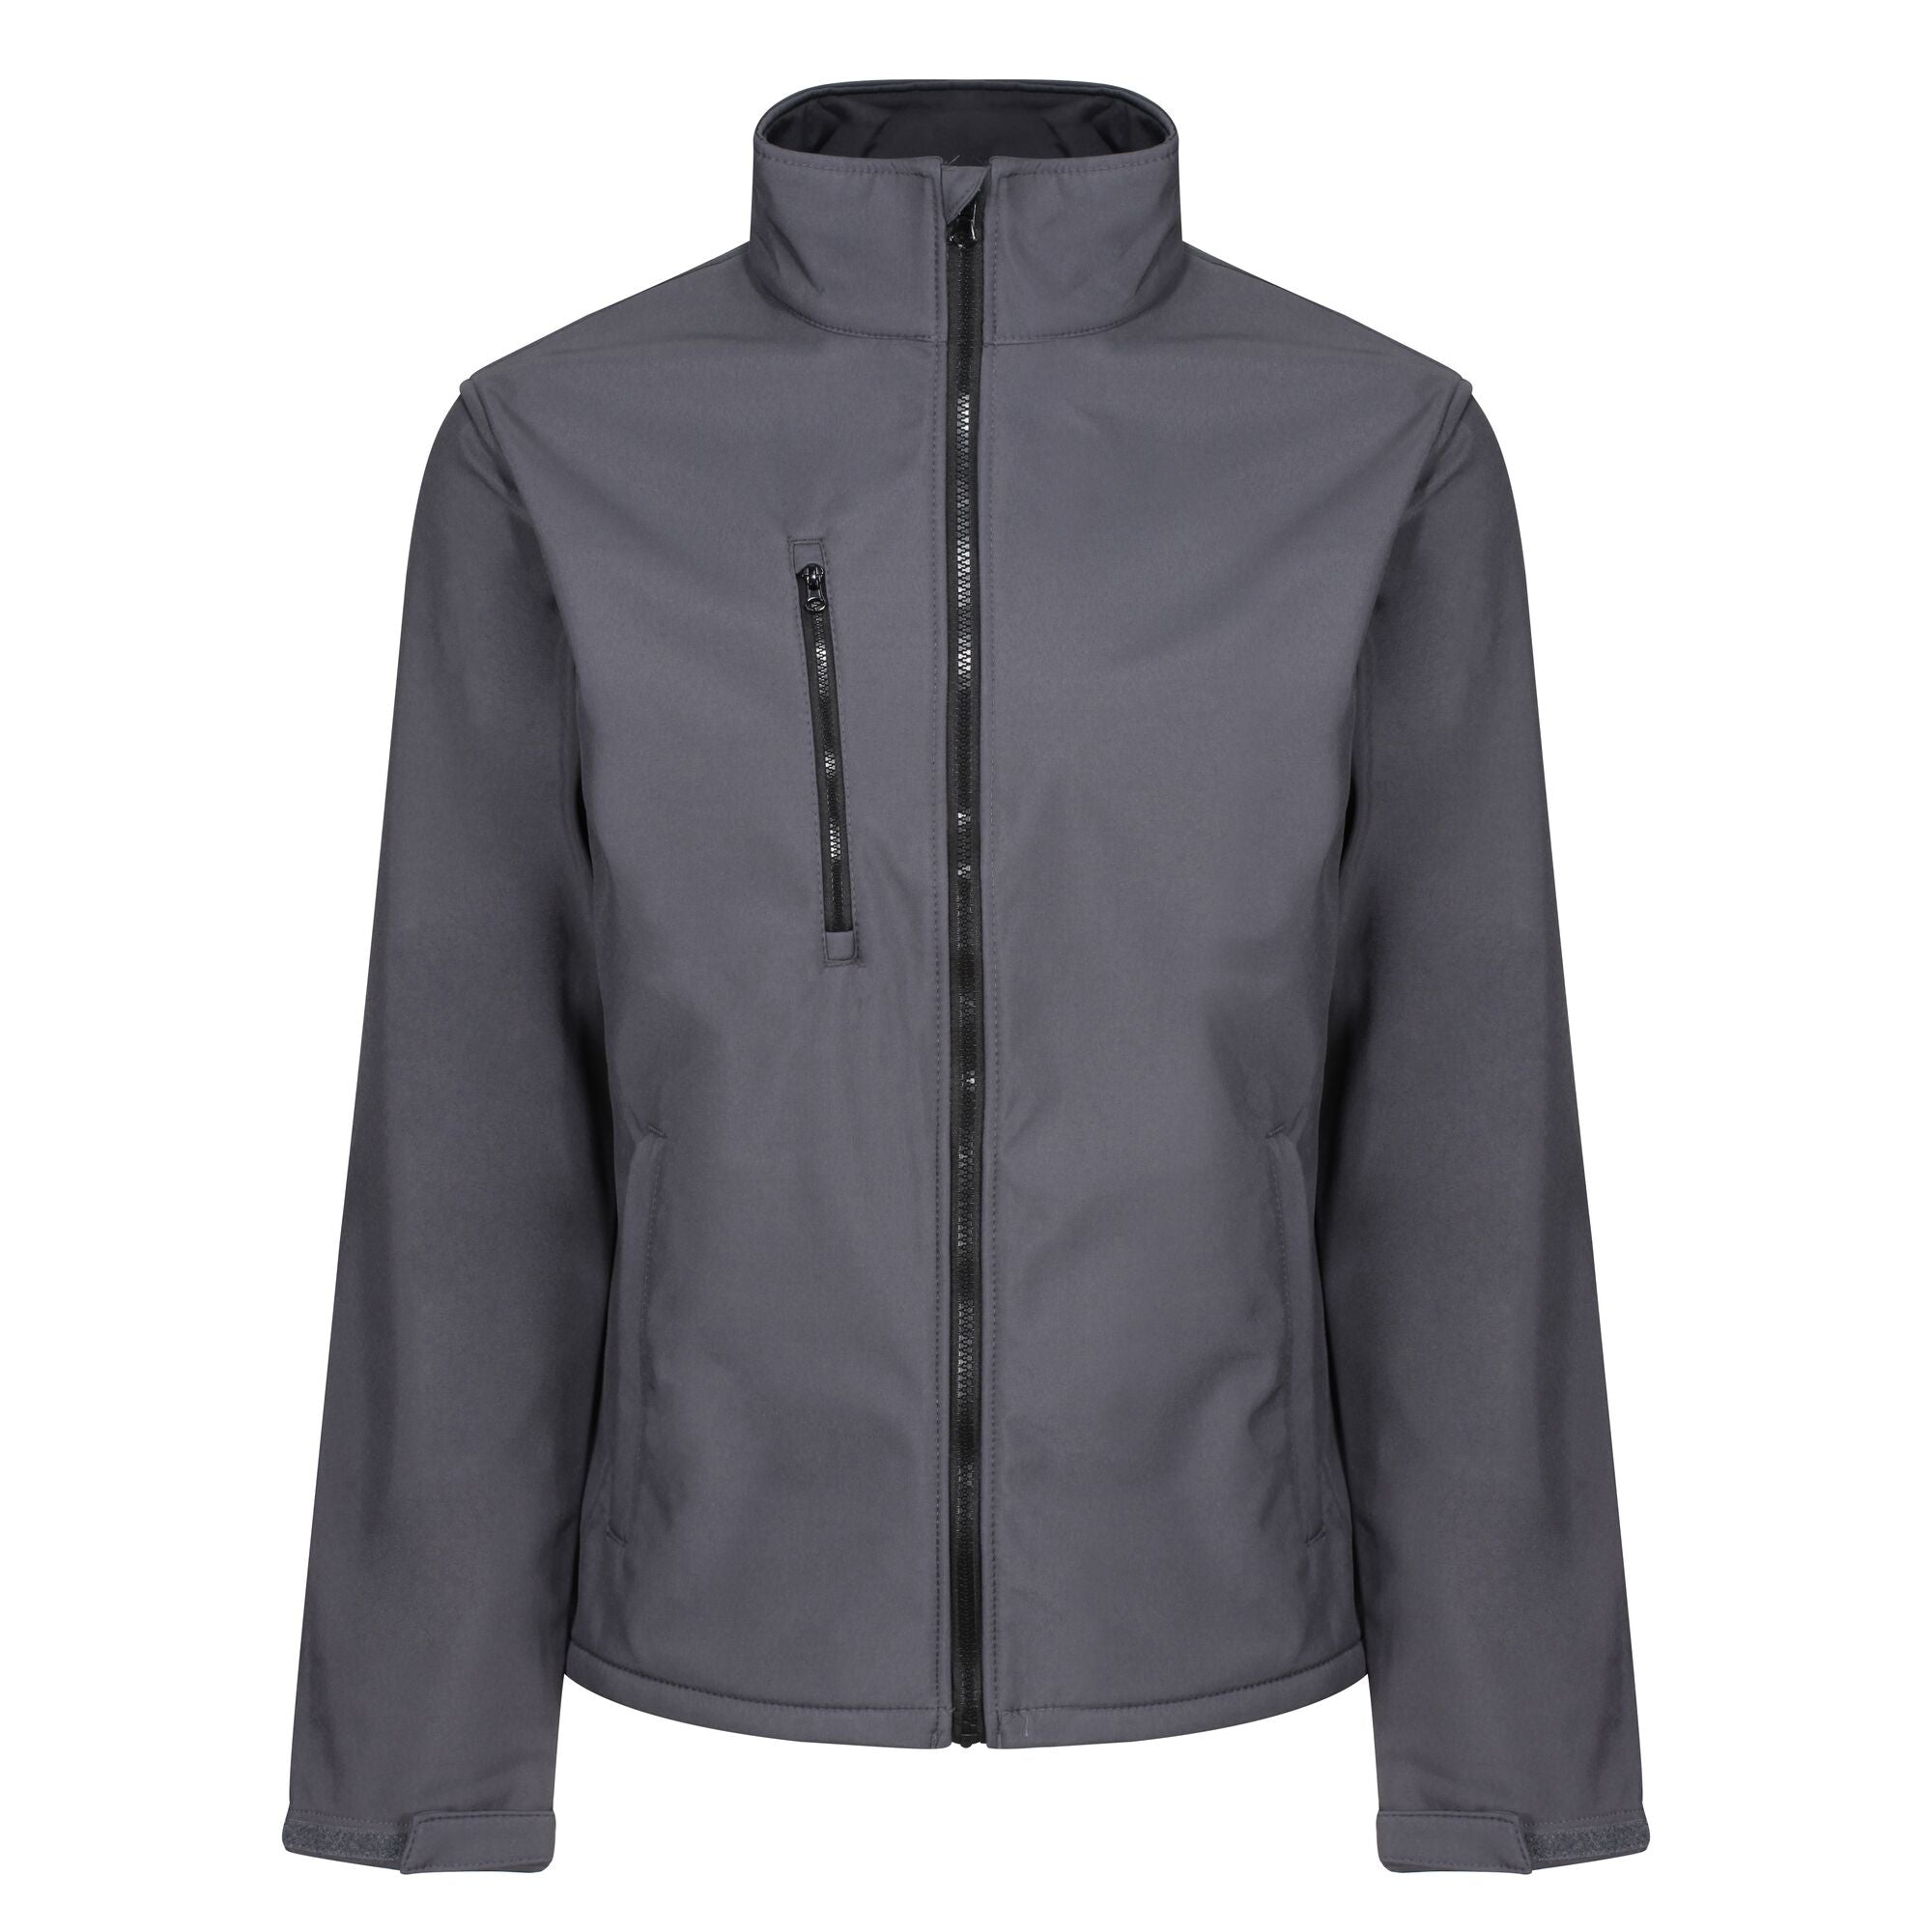 Regatta Ablaze 3-Layer Softshell Jacket - Seal Grey/Black